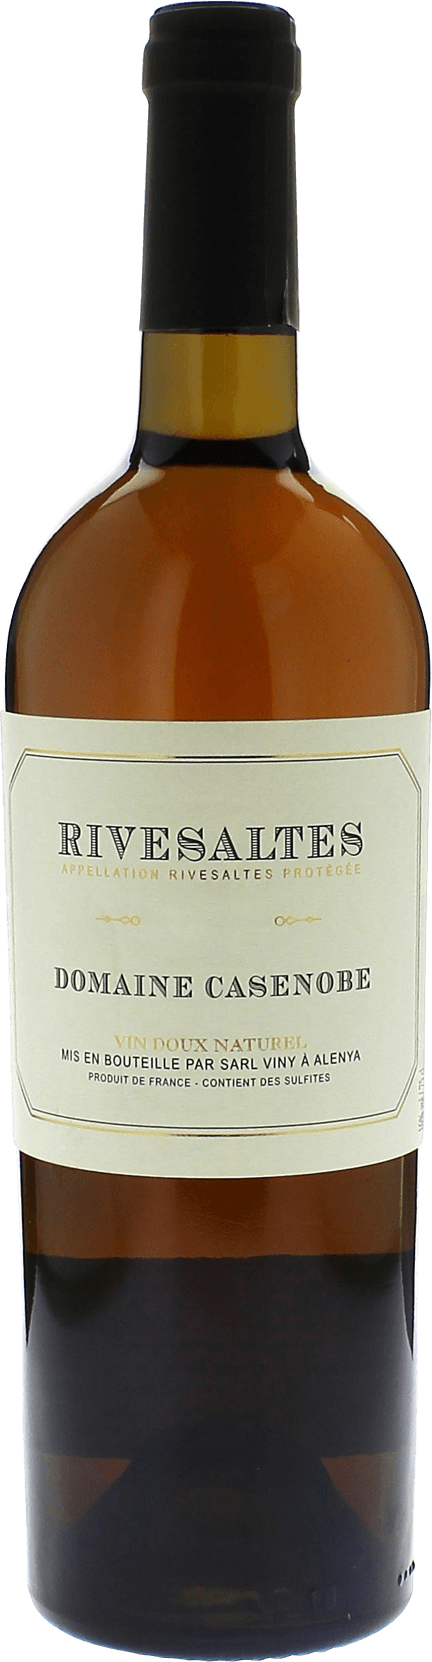 Domaine casenobe rivesaltes 1972 Vin doux naturel Rivesaltes, Vin doux naturel